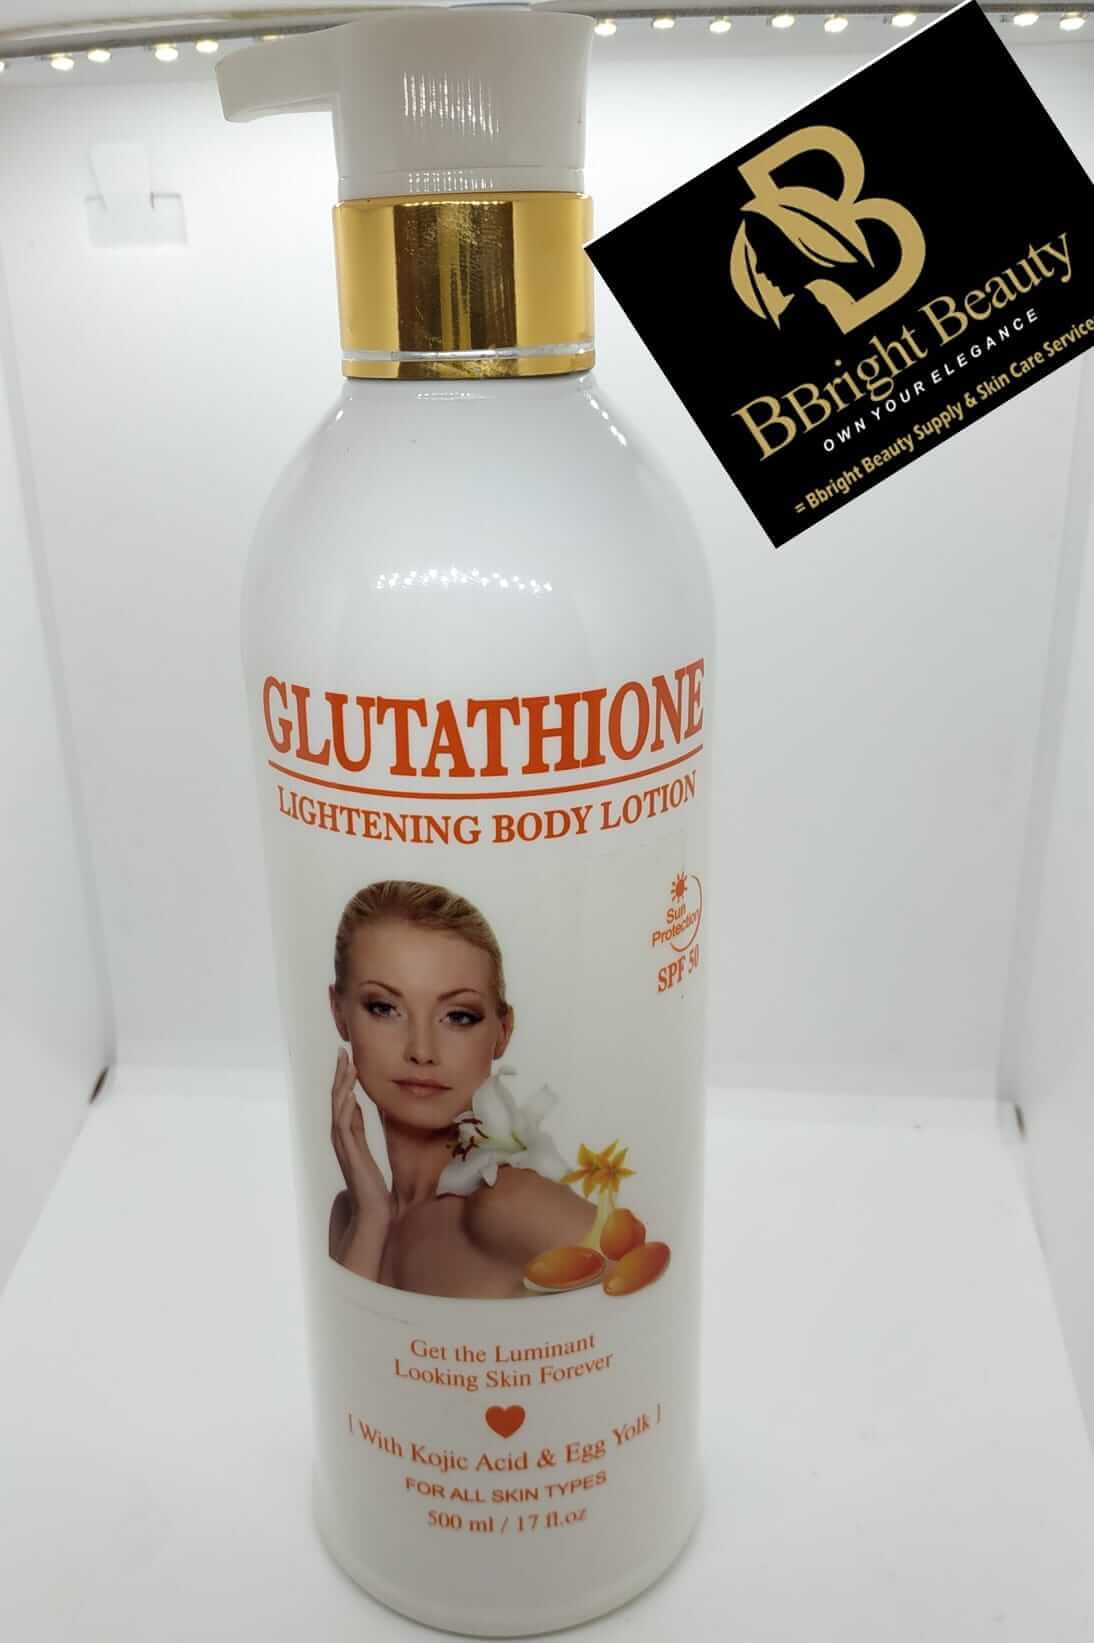 Glutathione lightening body lotion with kojic acid & egg yolk plus spf50 500ml